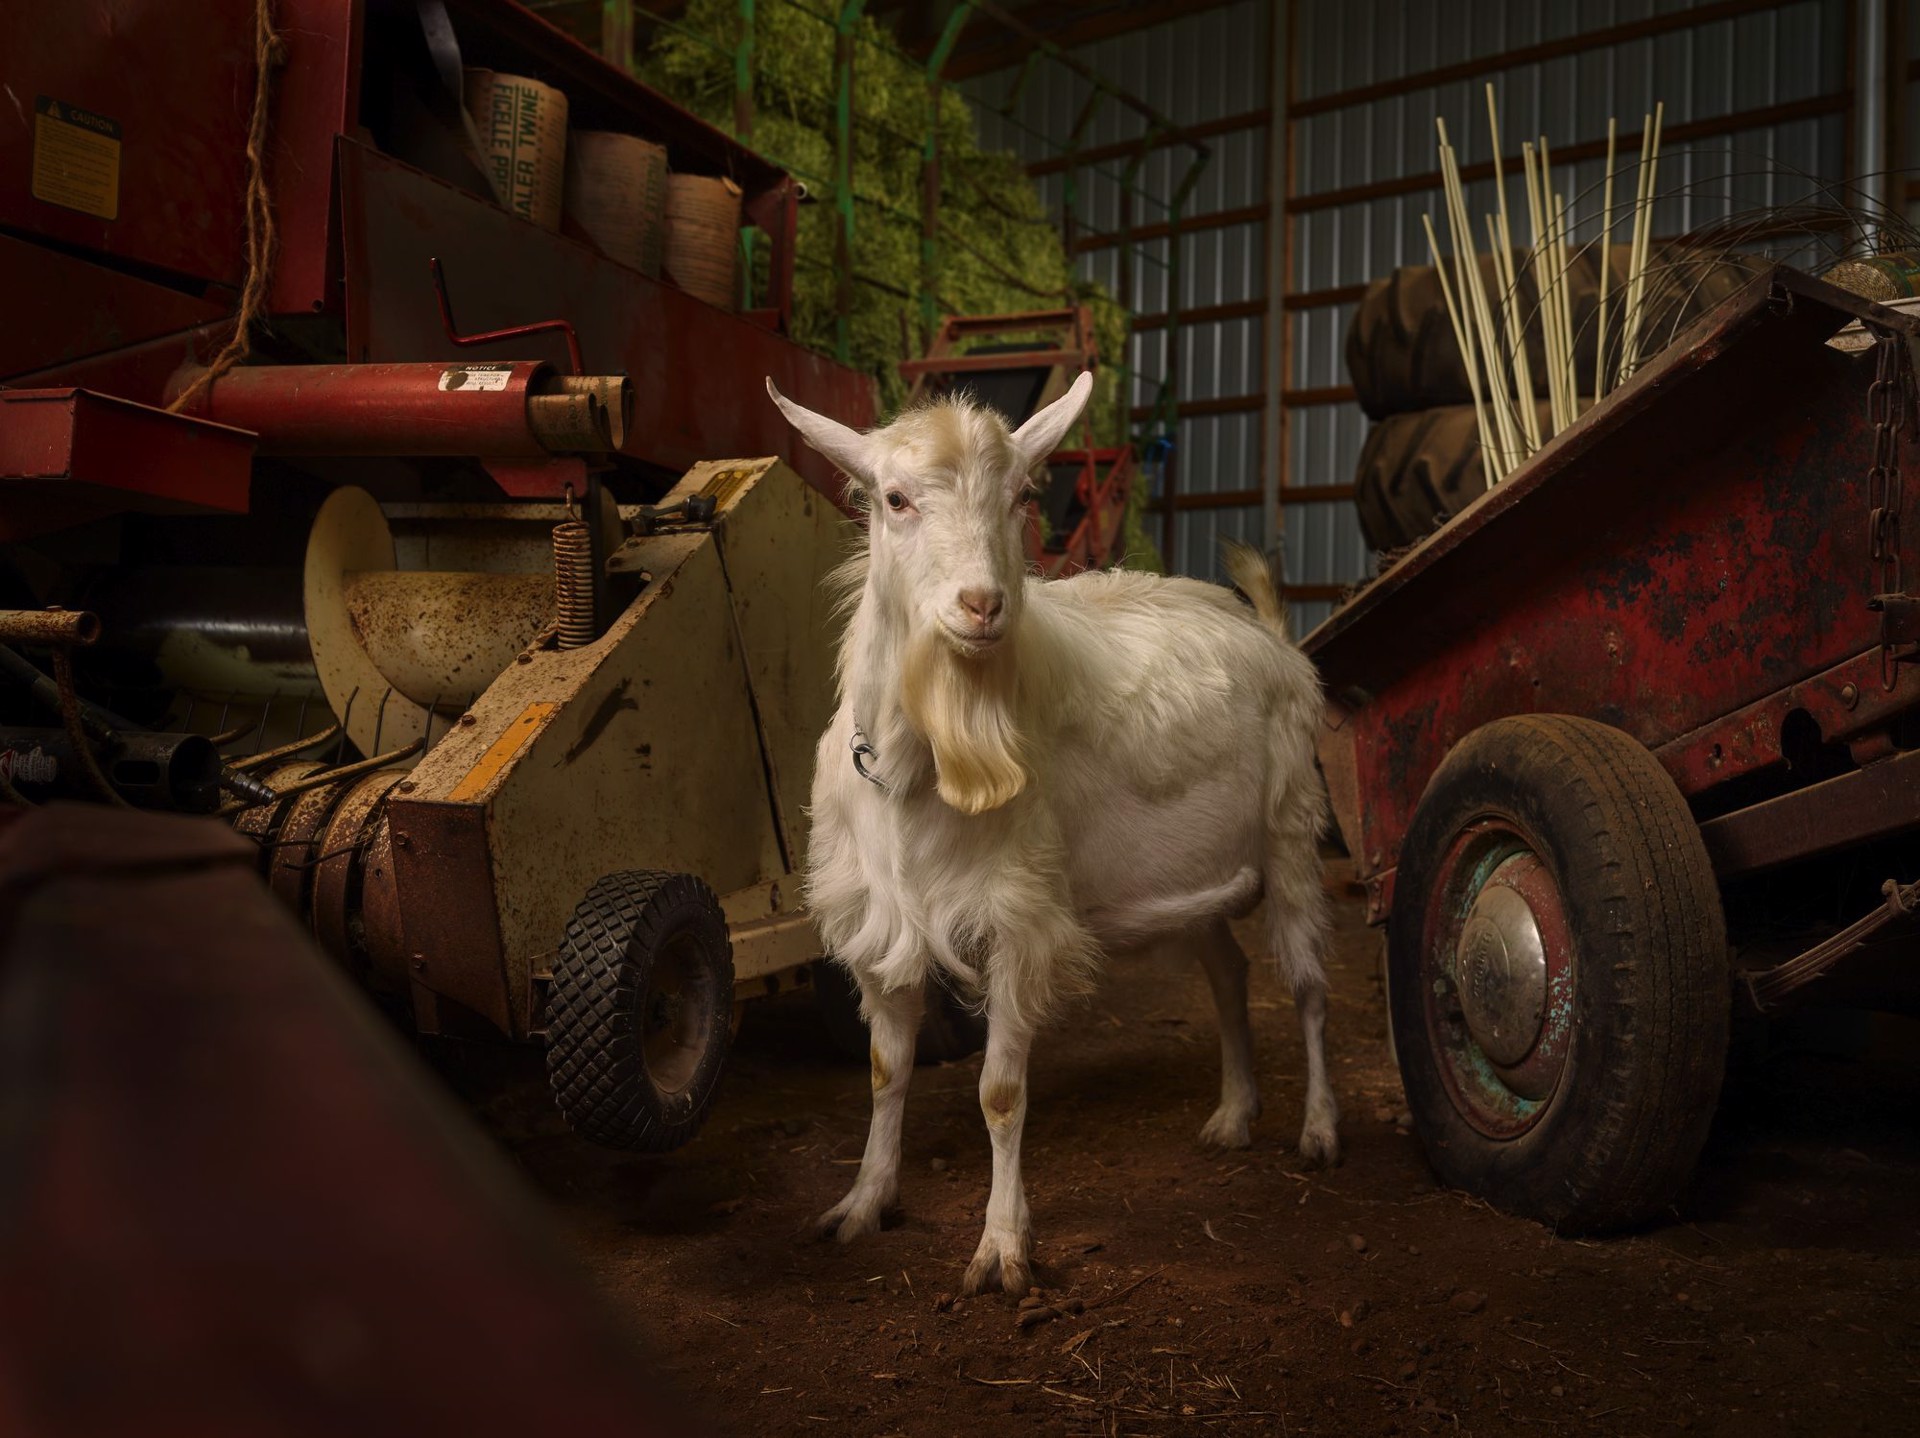 Czech Goat, Stearns County, Minnesota, USA, 2/10 by R. J. Kern